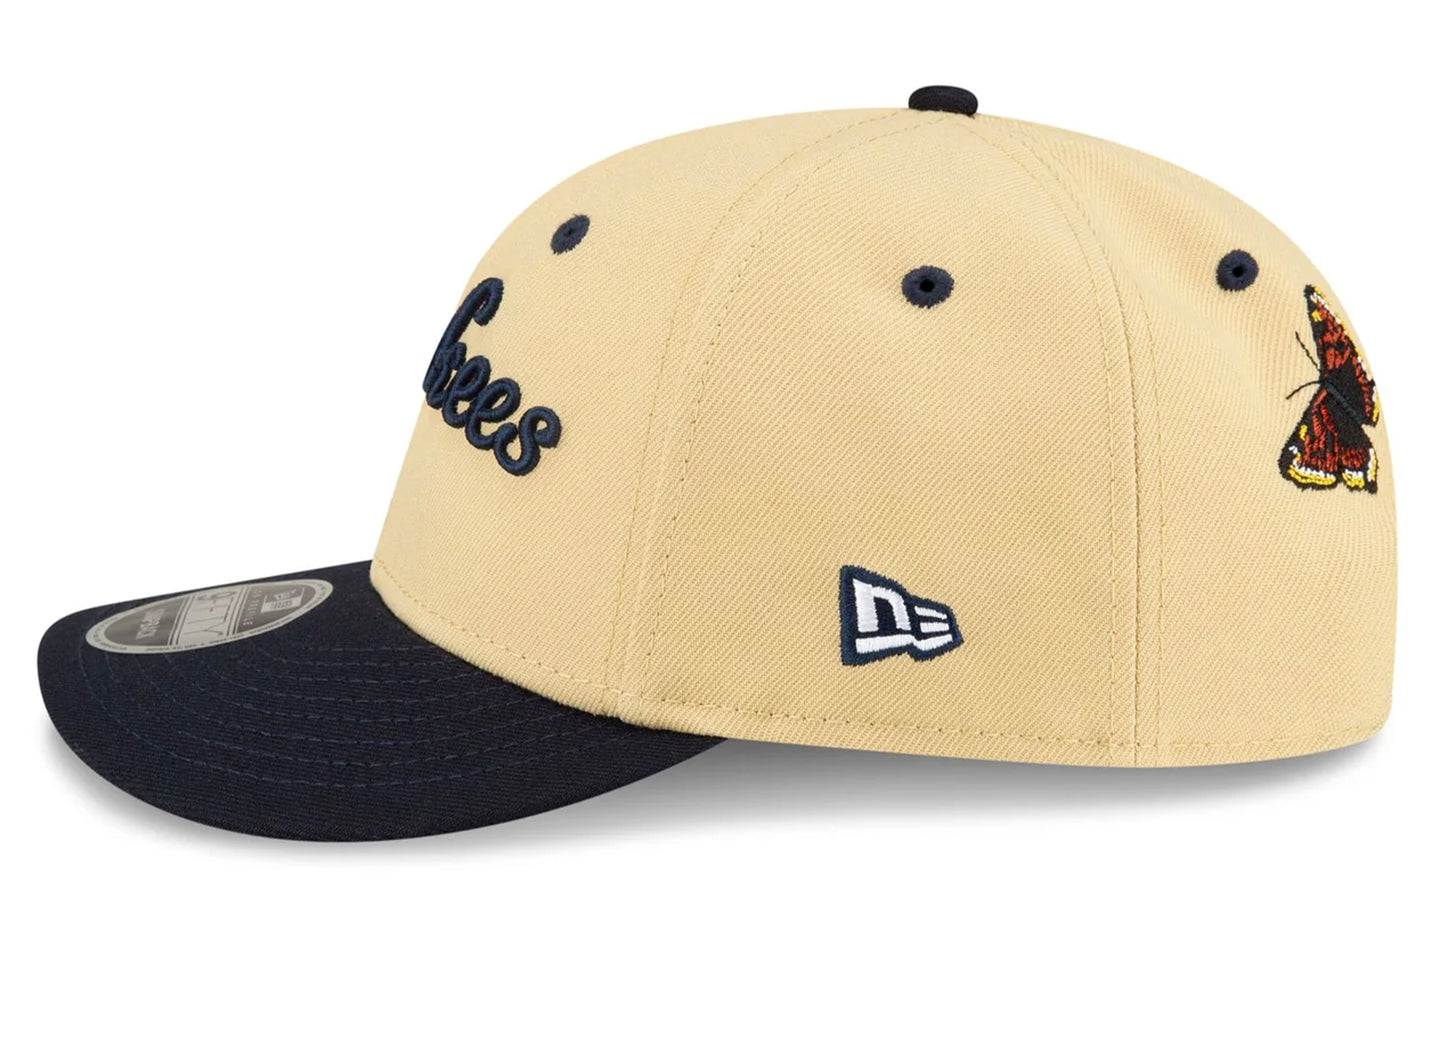 New Era x Felt New York Yankees Low Profile 9FIFTY Snapback Hat